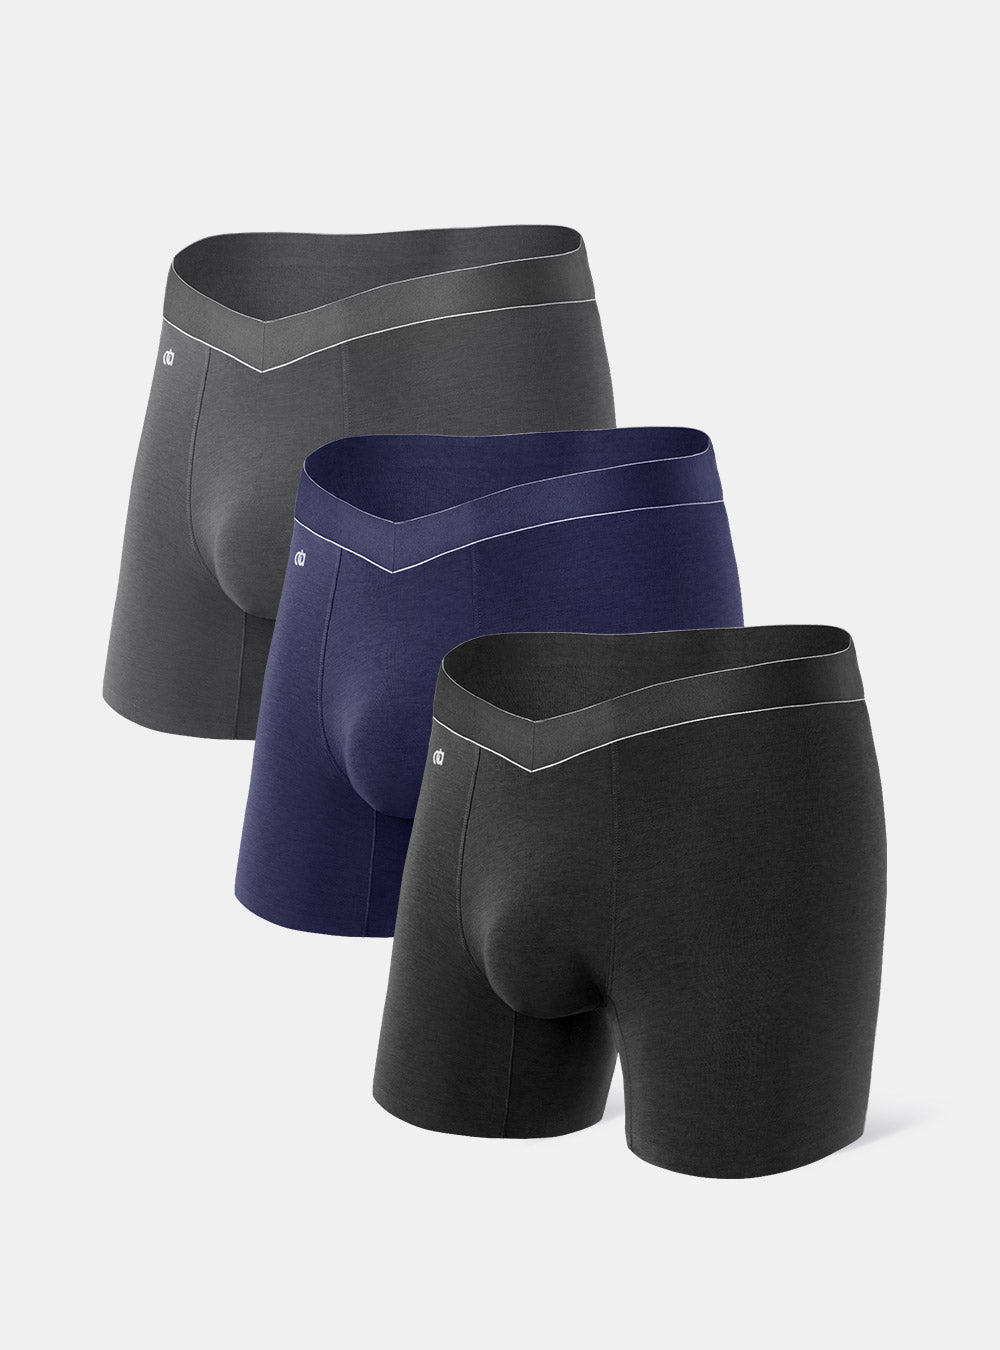 David Archy Mens Underwear Contoured Bulge Pouch Bikini Briefs Micro Modal  Fabric From 12,12 €